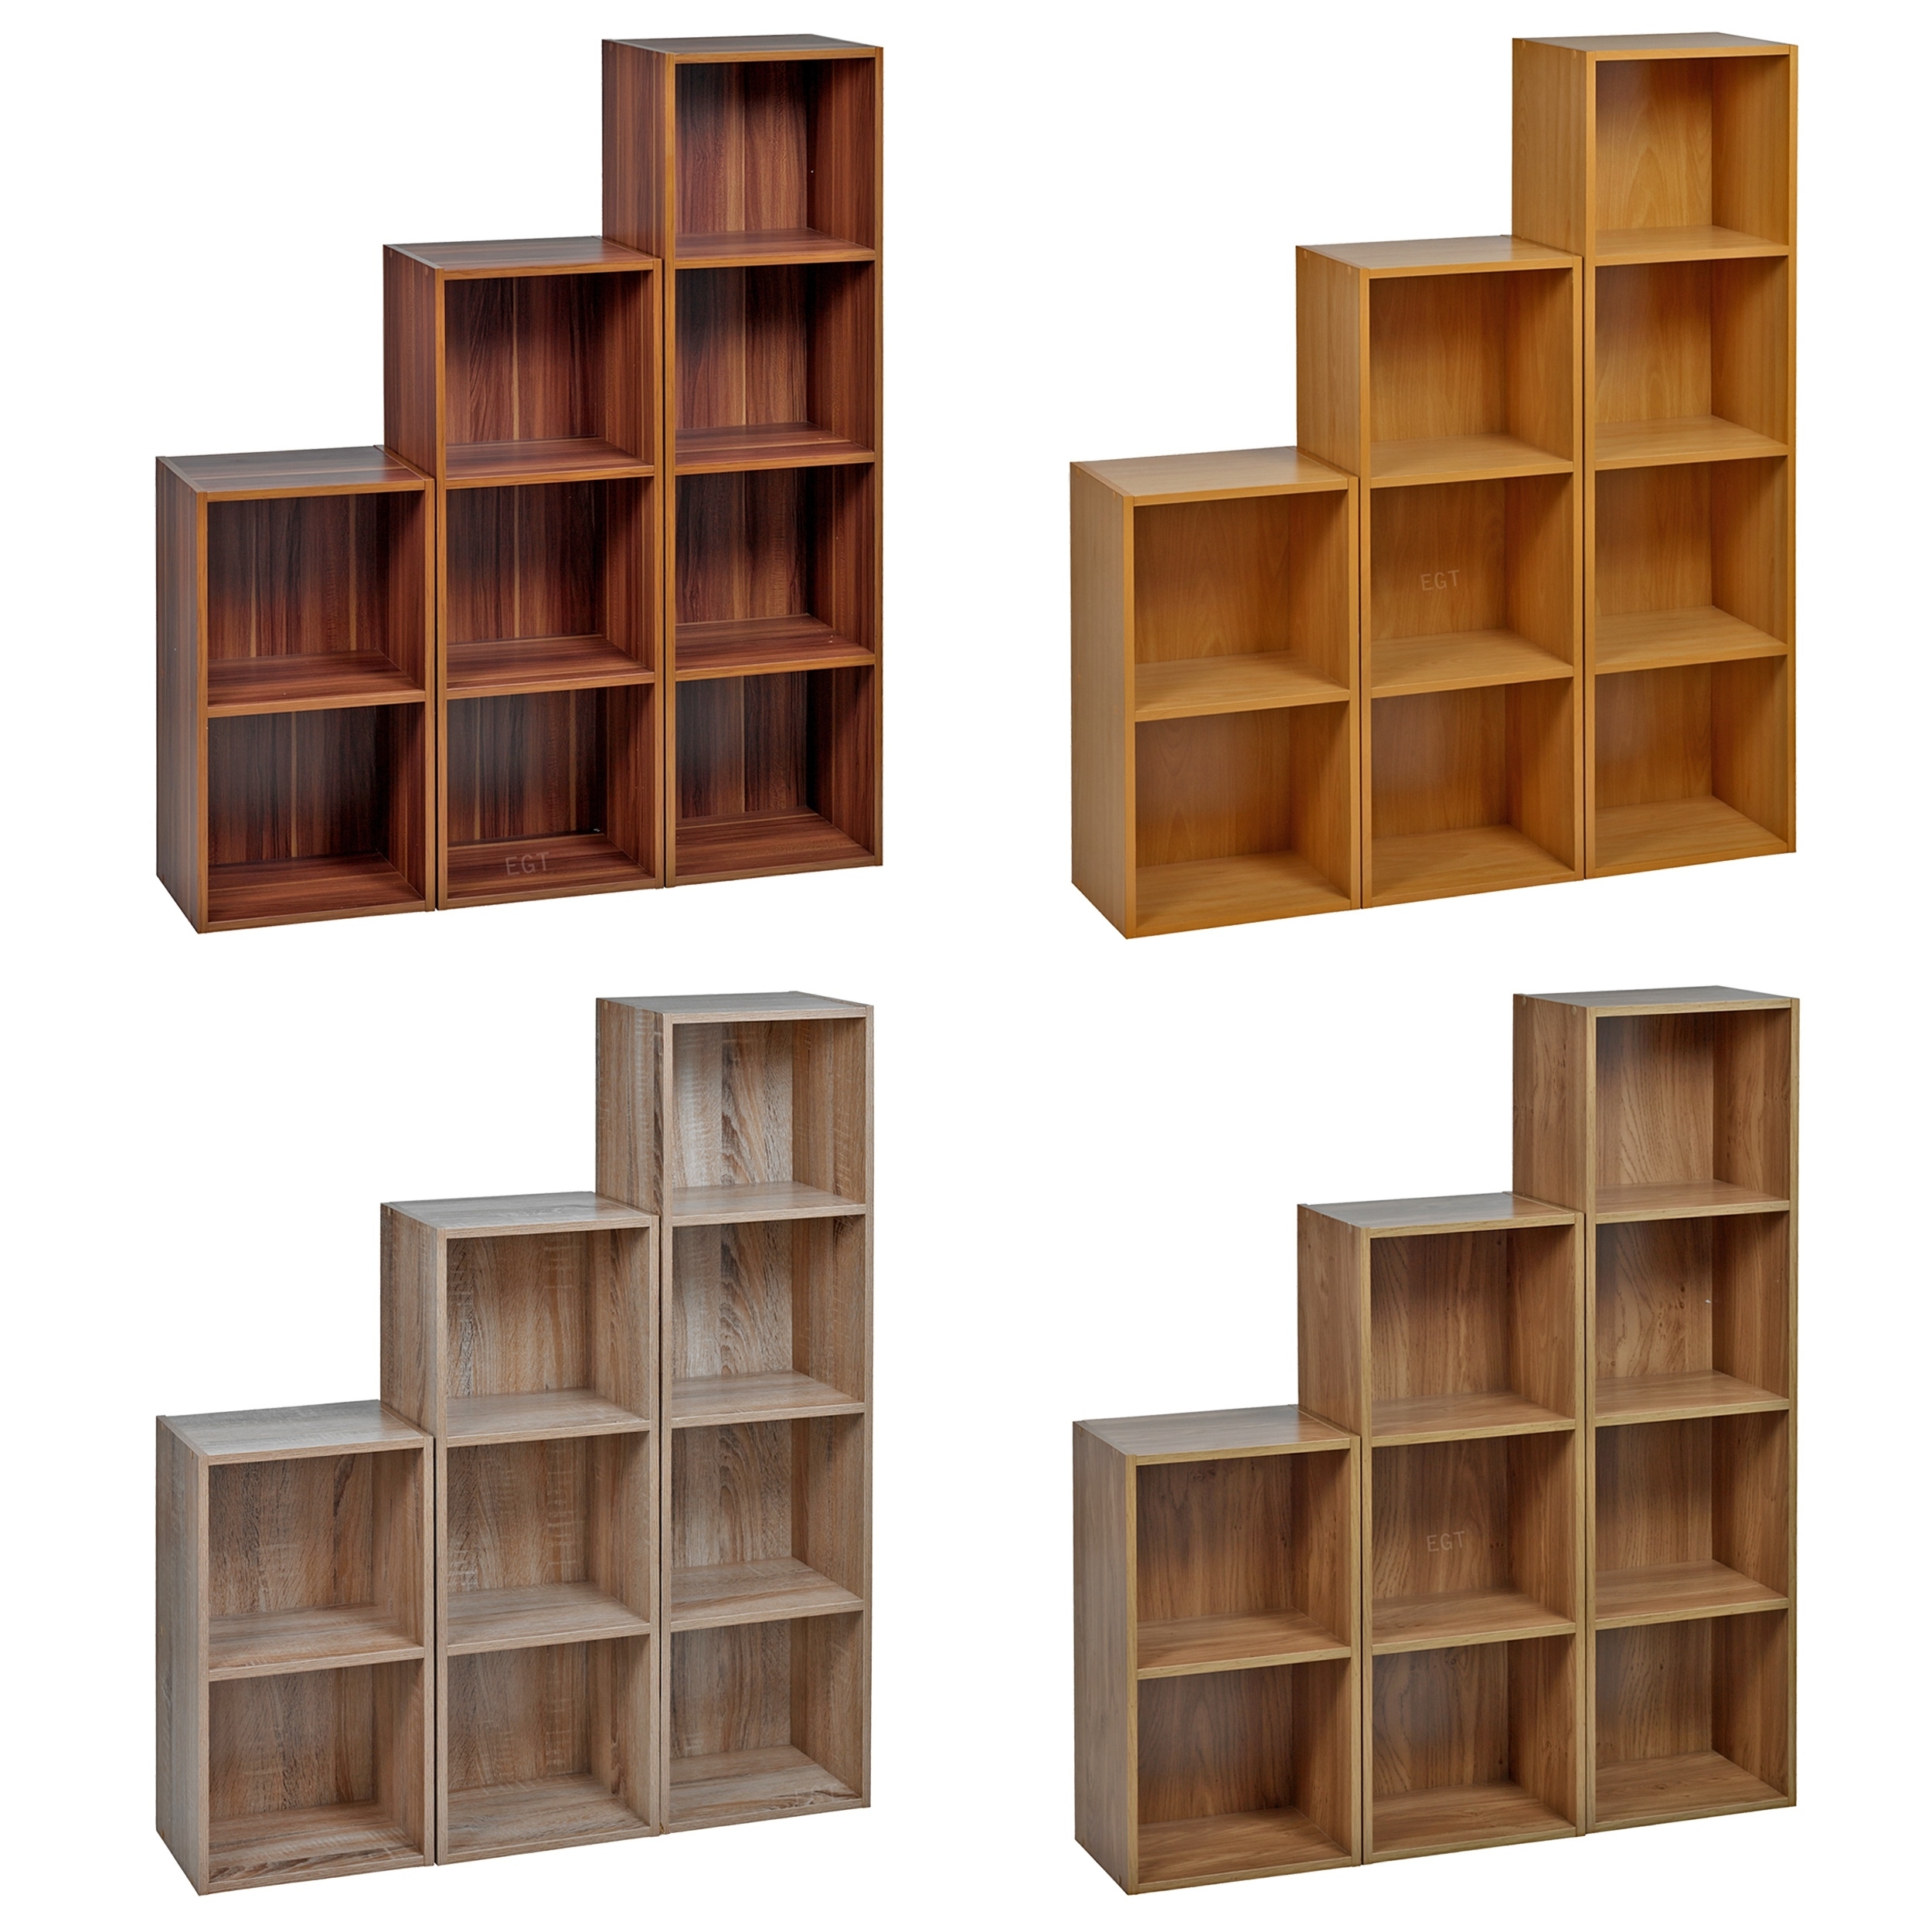 URBN Living 6 Cube Oak effect Modular Wooden Bookcase Shelving Display Shelf Storage Unit with Three Black Doors